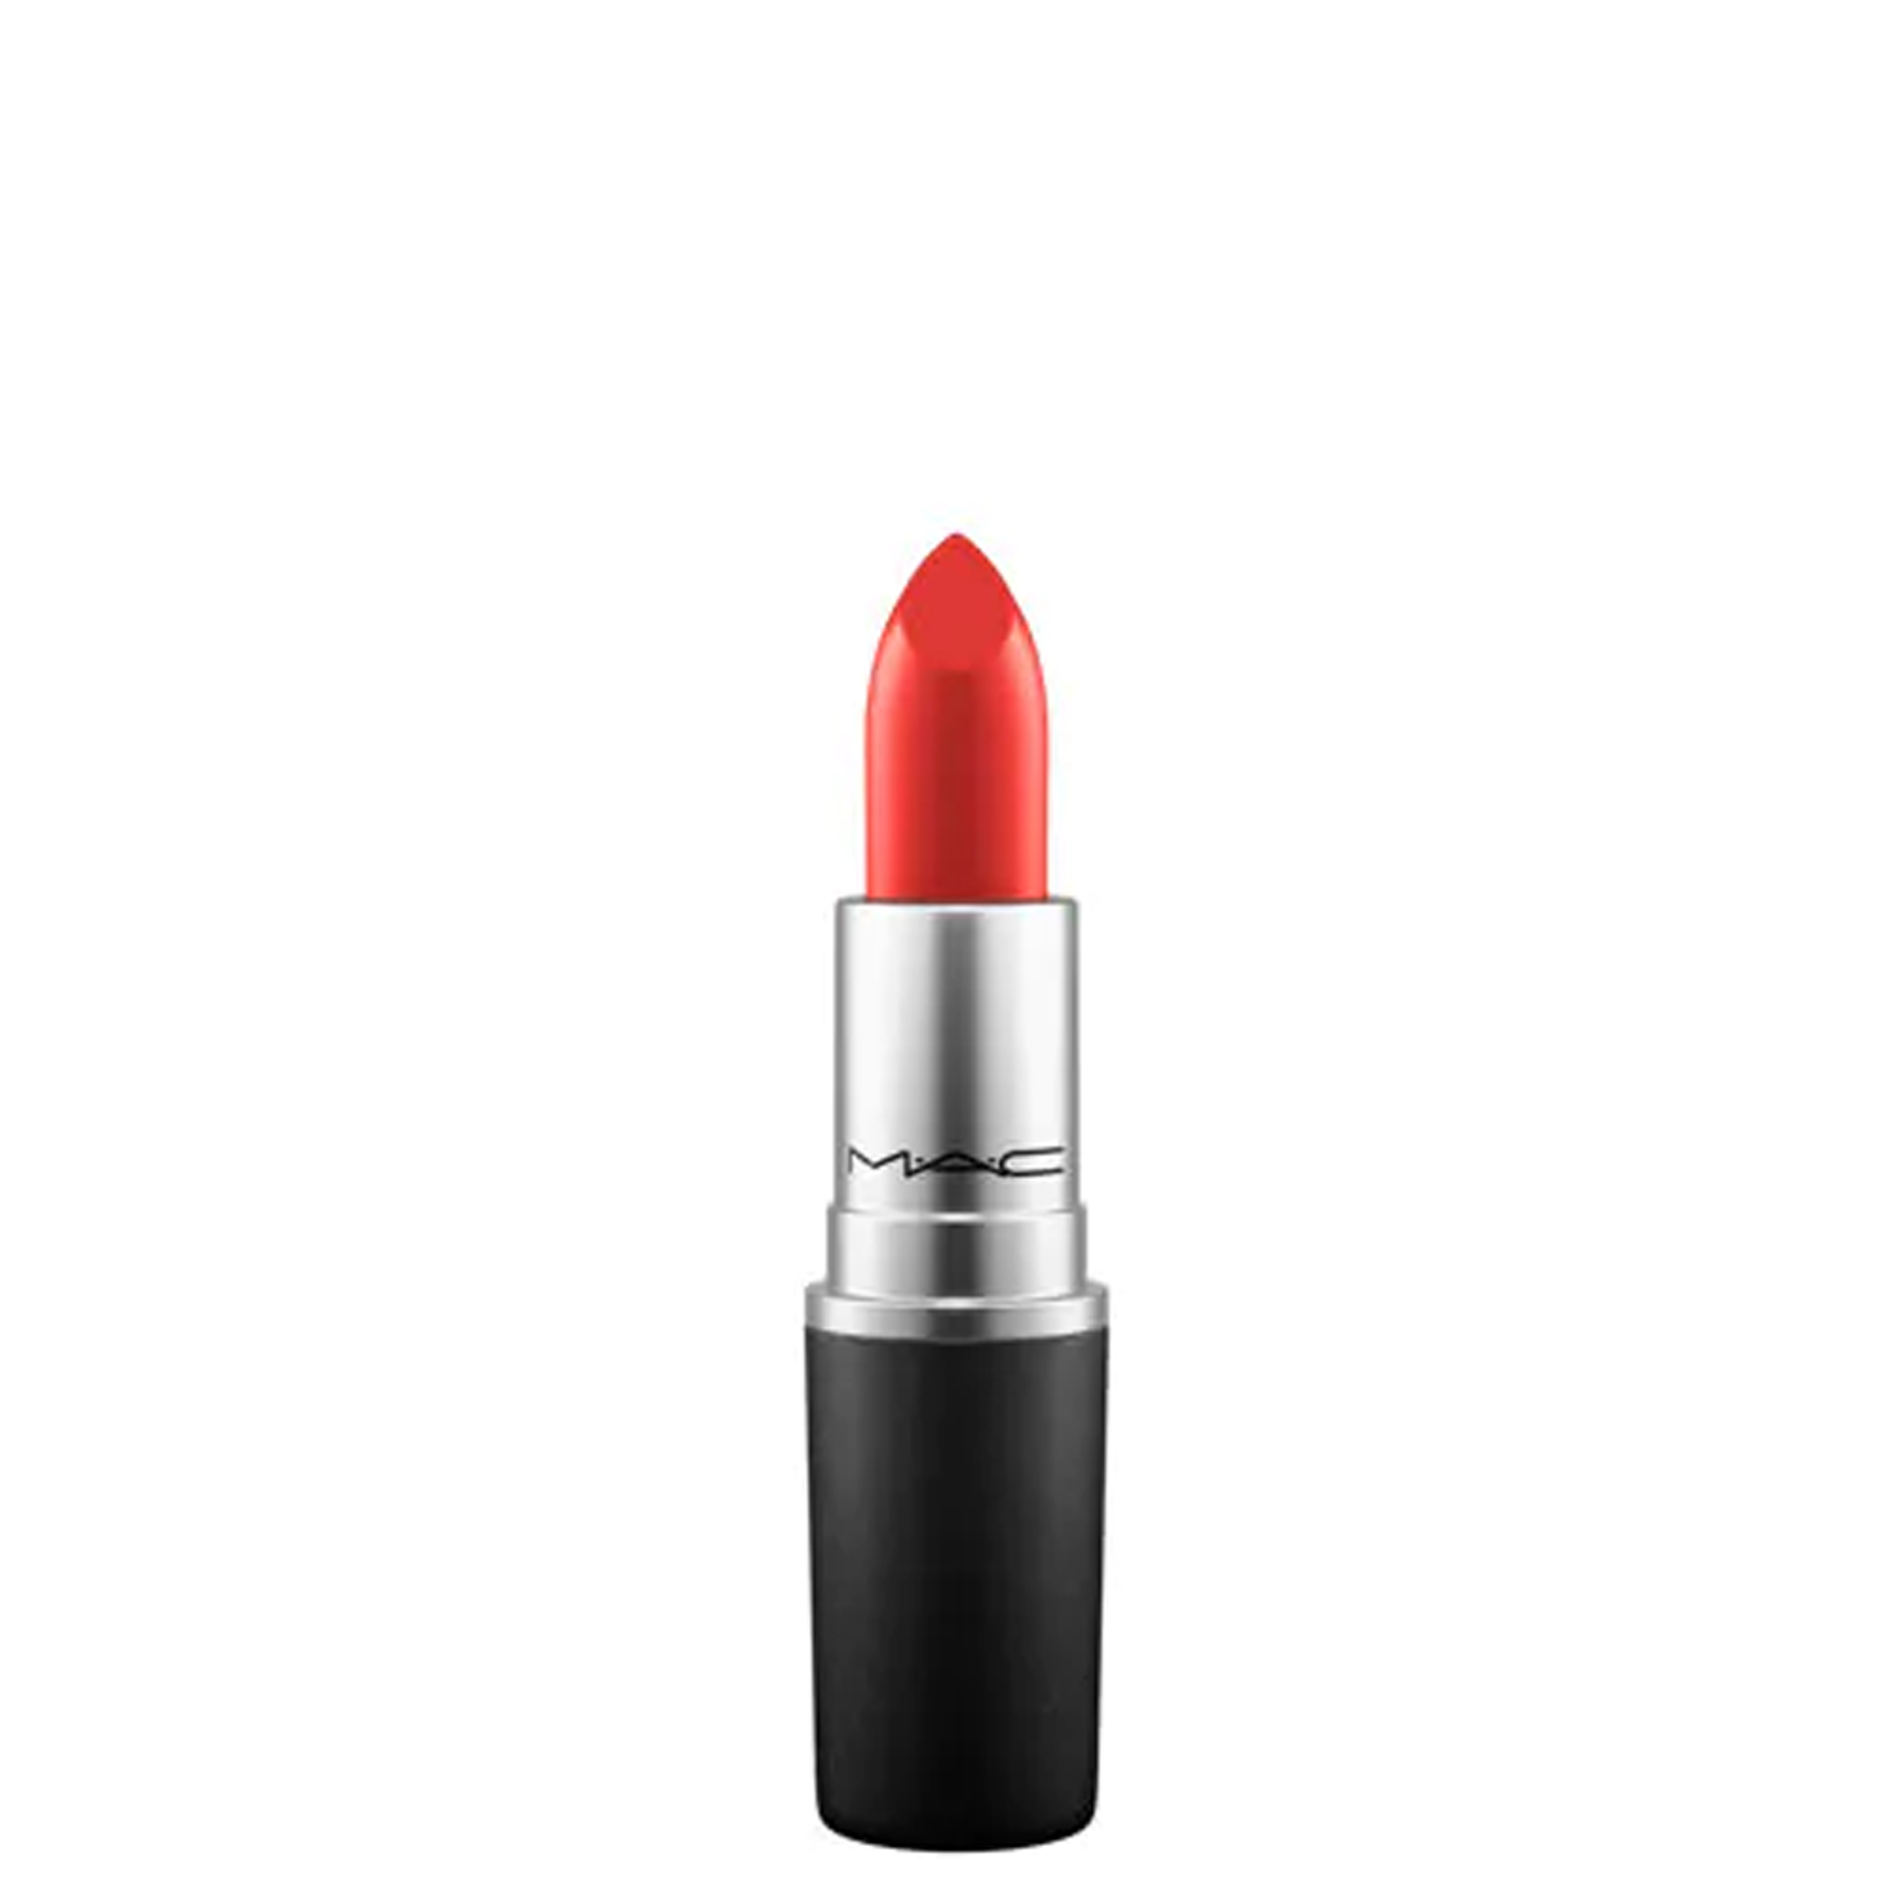 son-thoi-mac-lustre-lipstick-3g-12